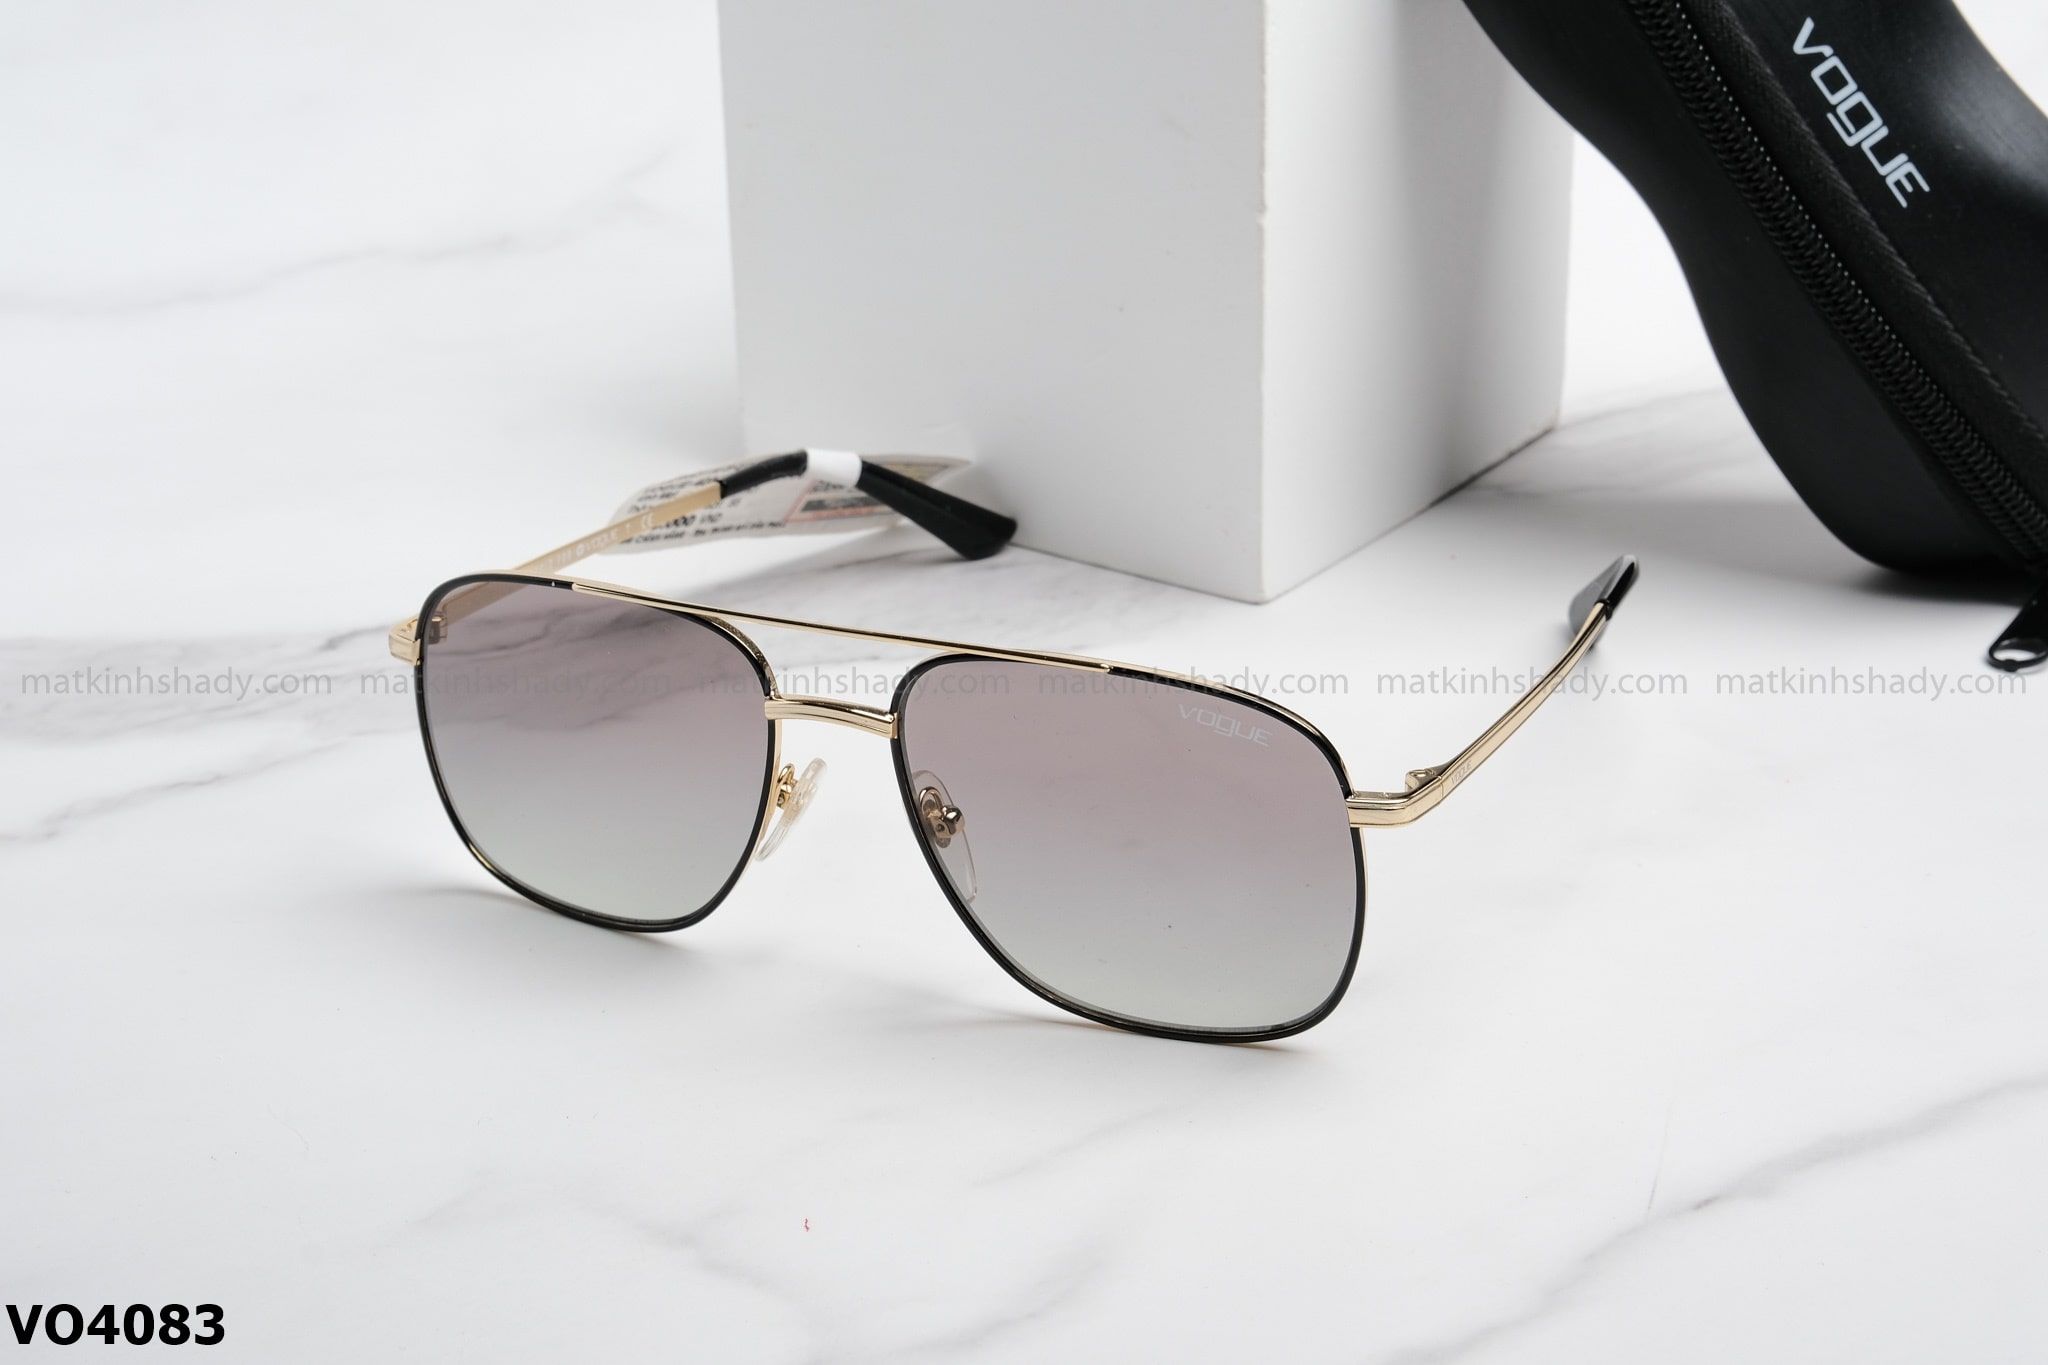  Vogue Eyewear - Sunglasses - VO4083 